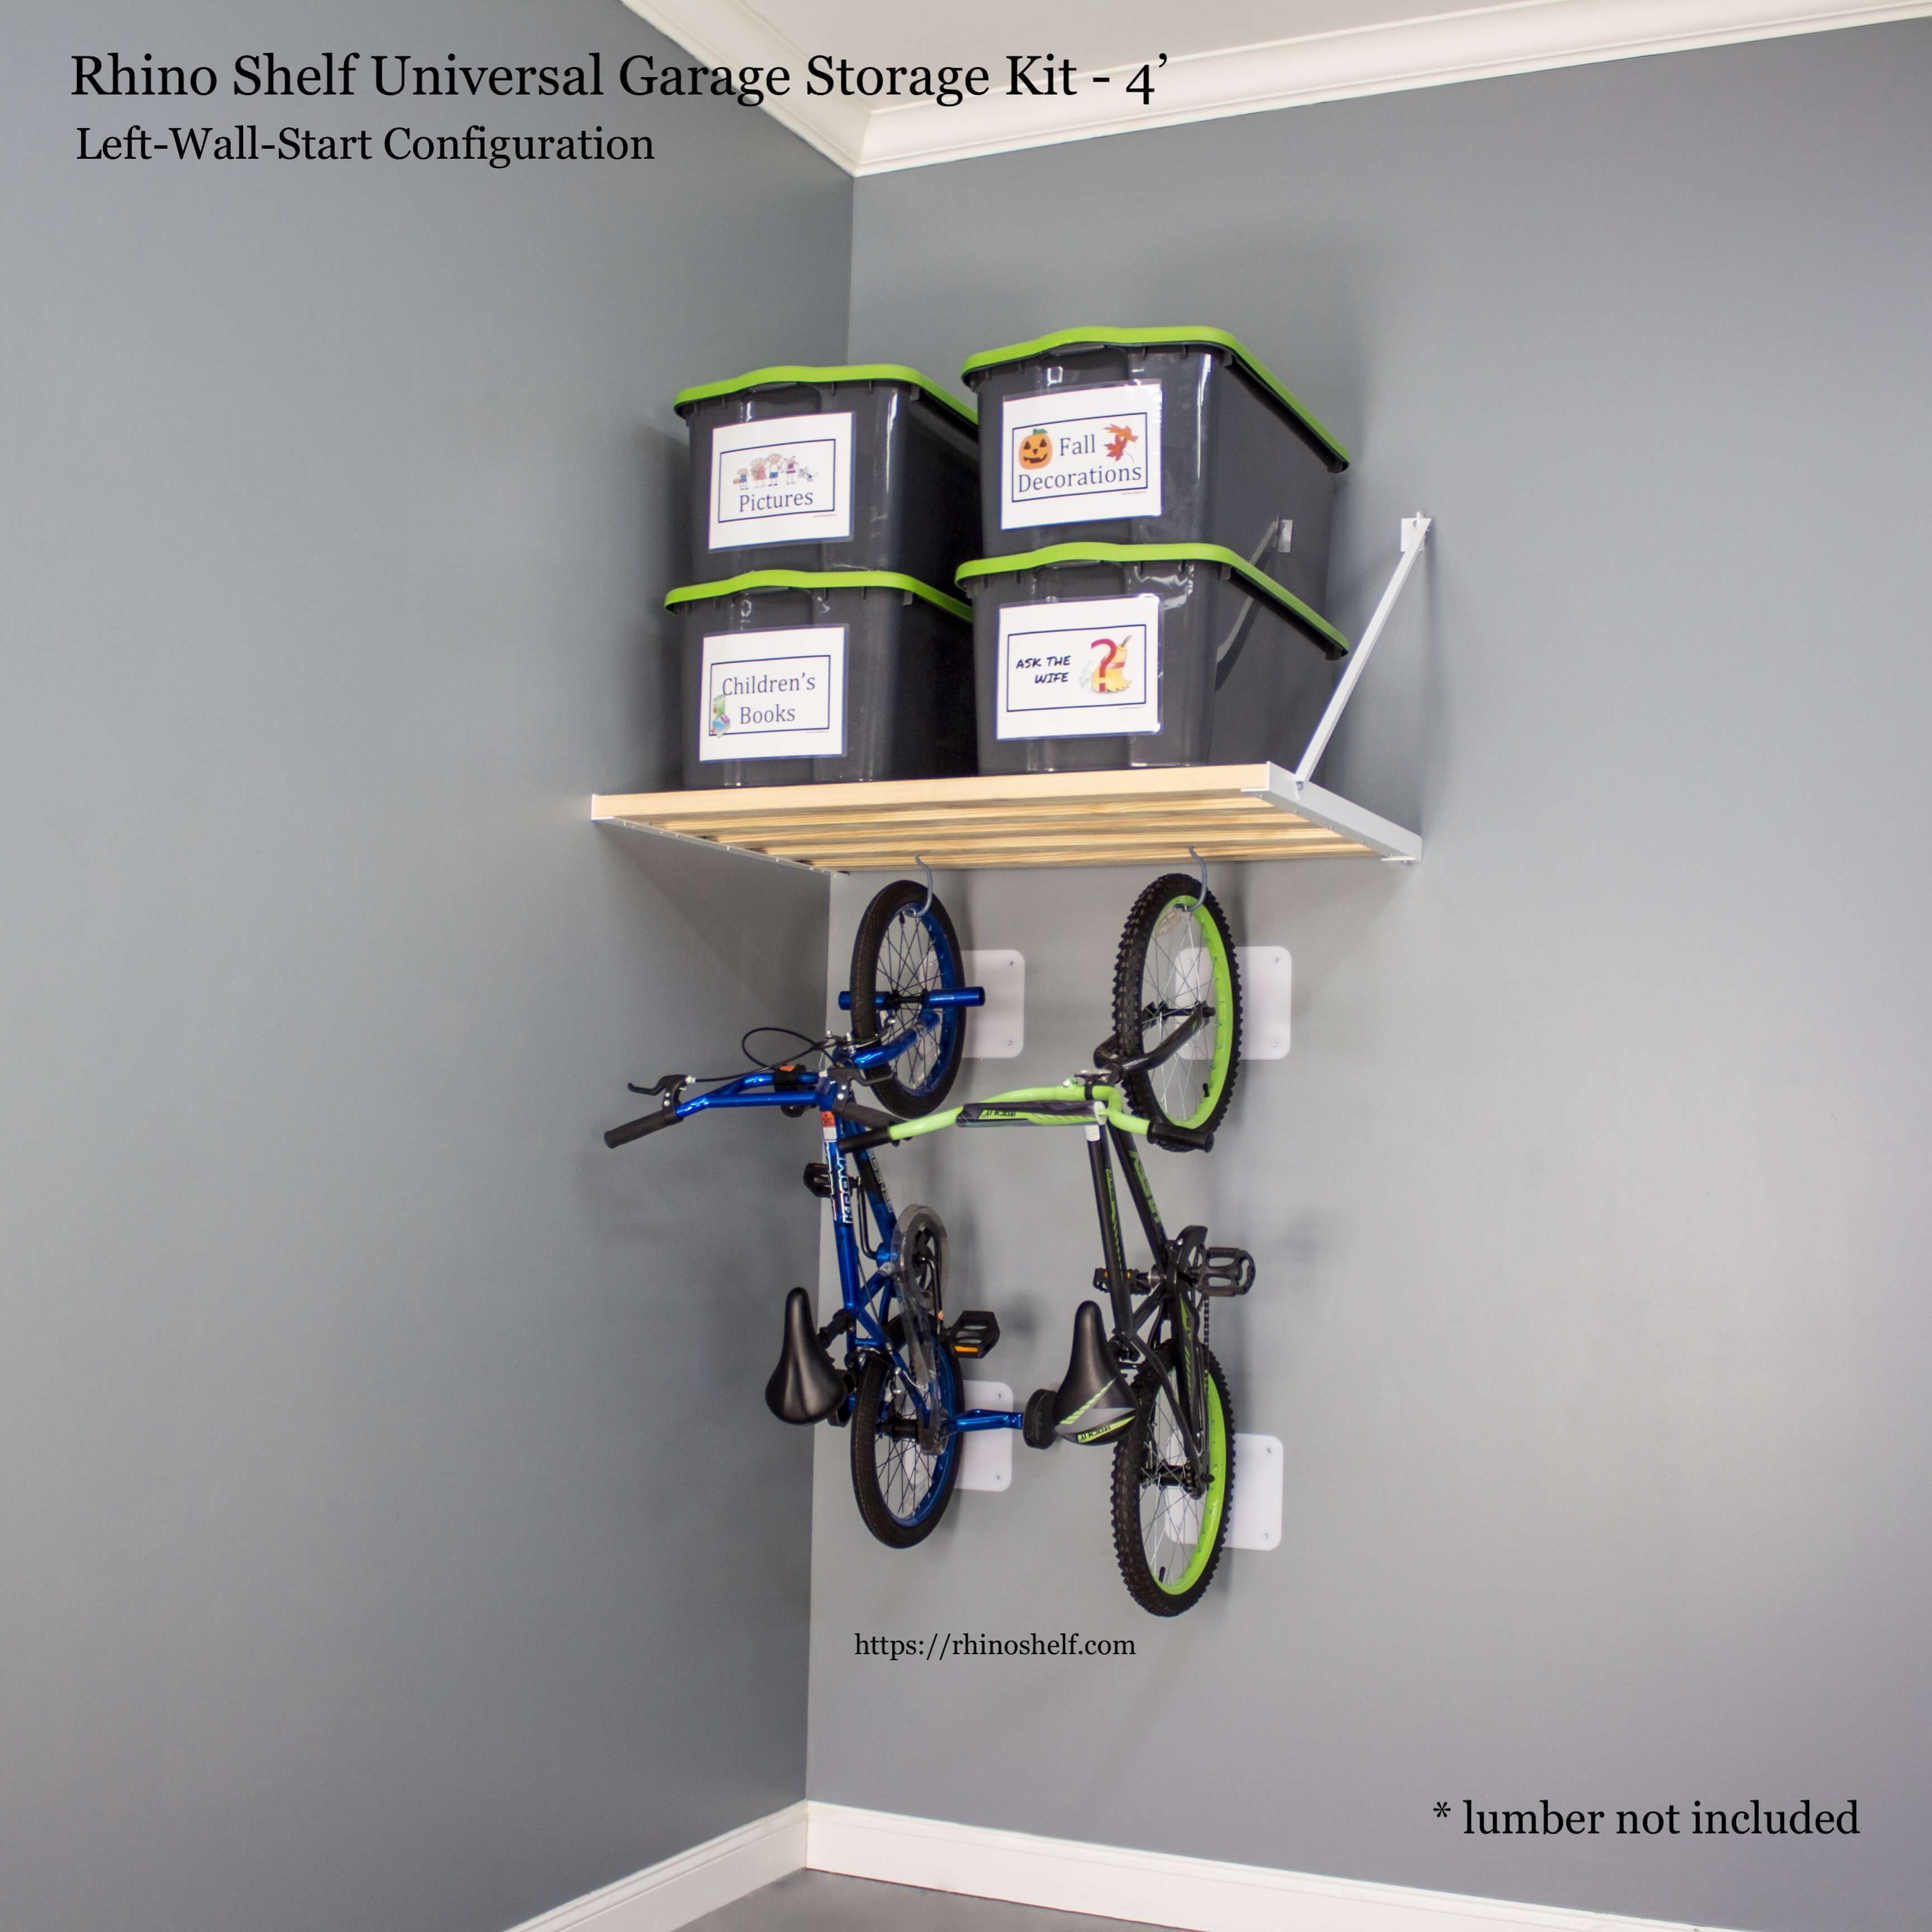 Rhino Shelf Universal Garage Storage Kit - 4 ftLWS